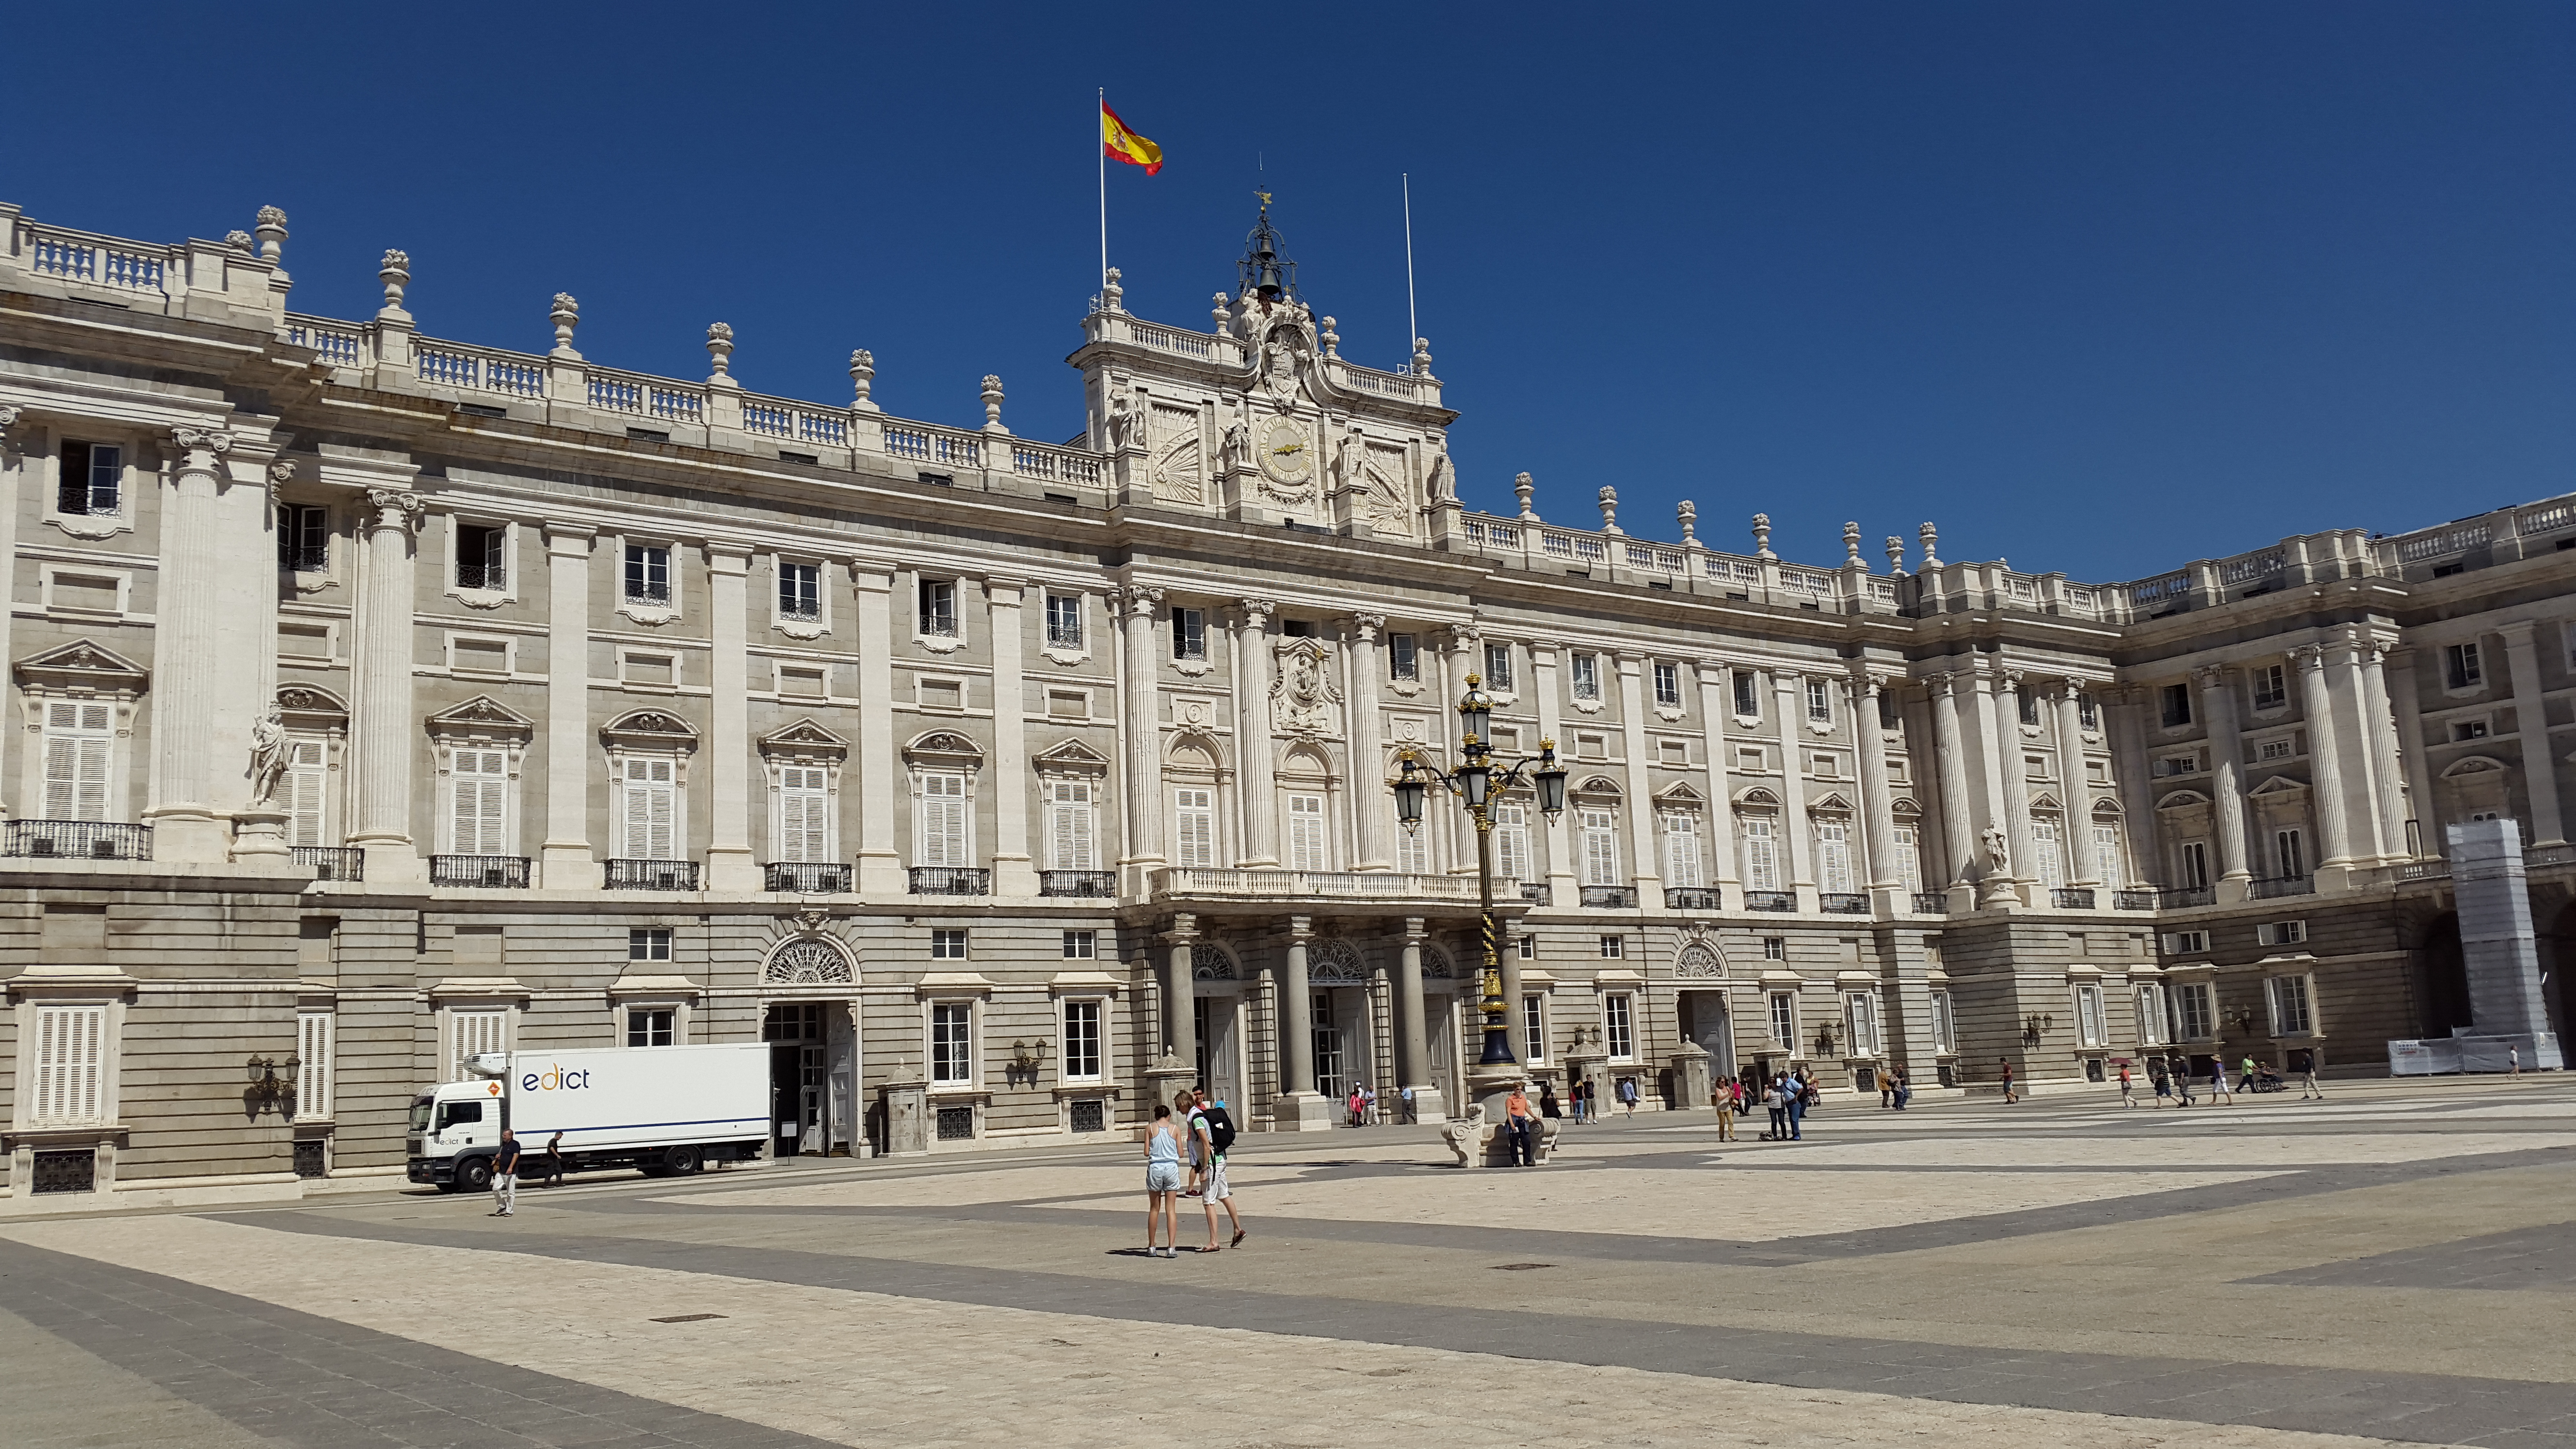 Palacio Real de Madrid/ Royal Palace of Madrid - TravBlog.com ...